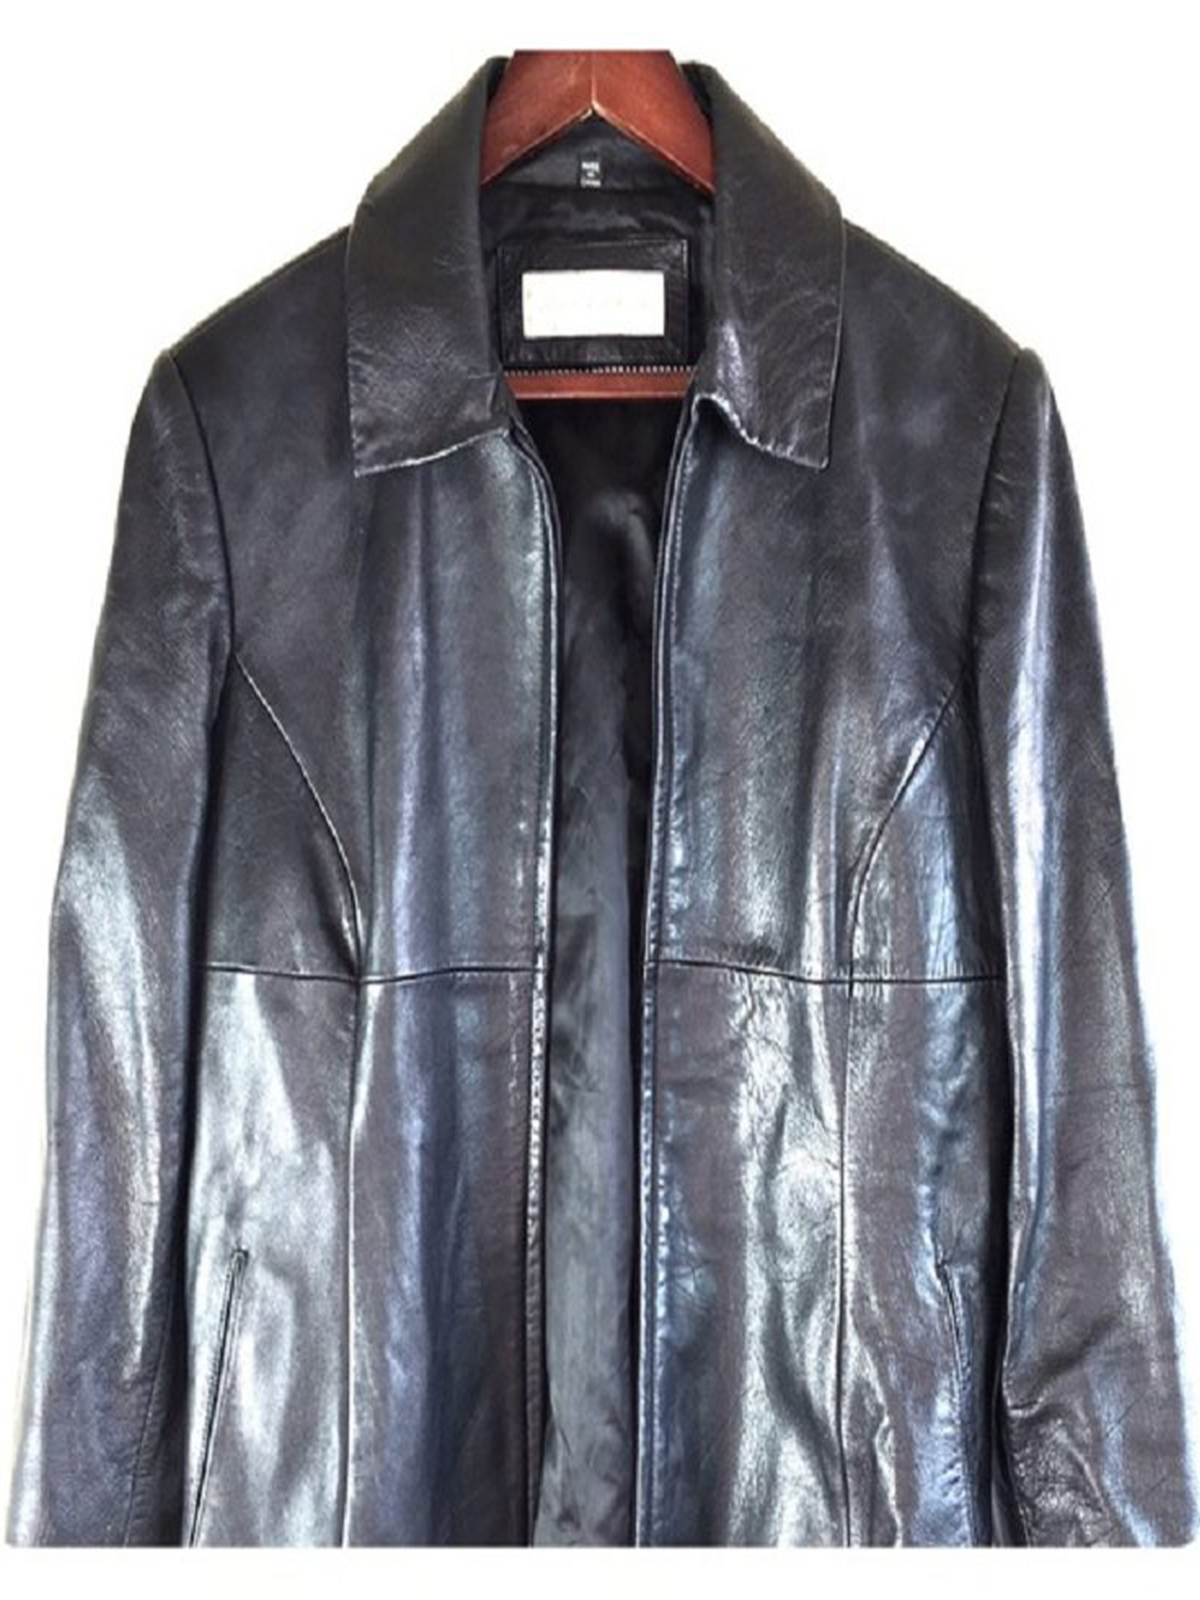 Jones New York Black Genuine Leather Jacket